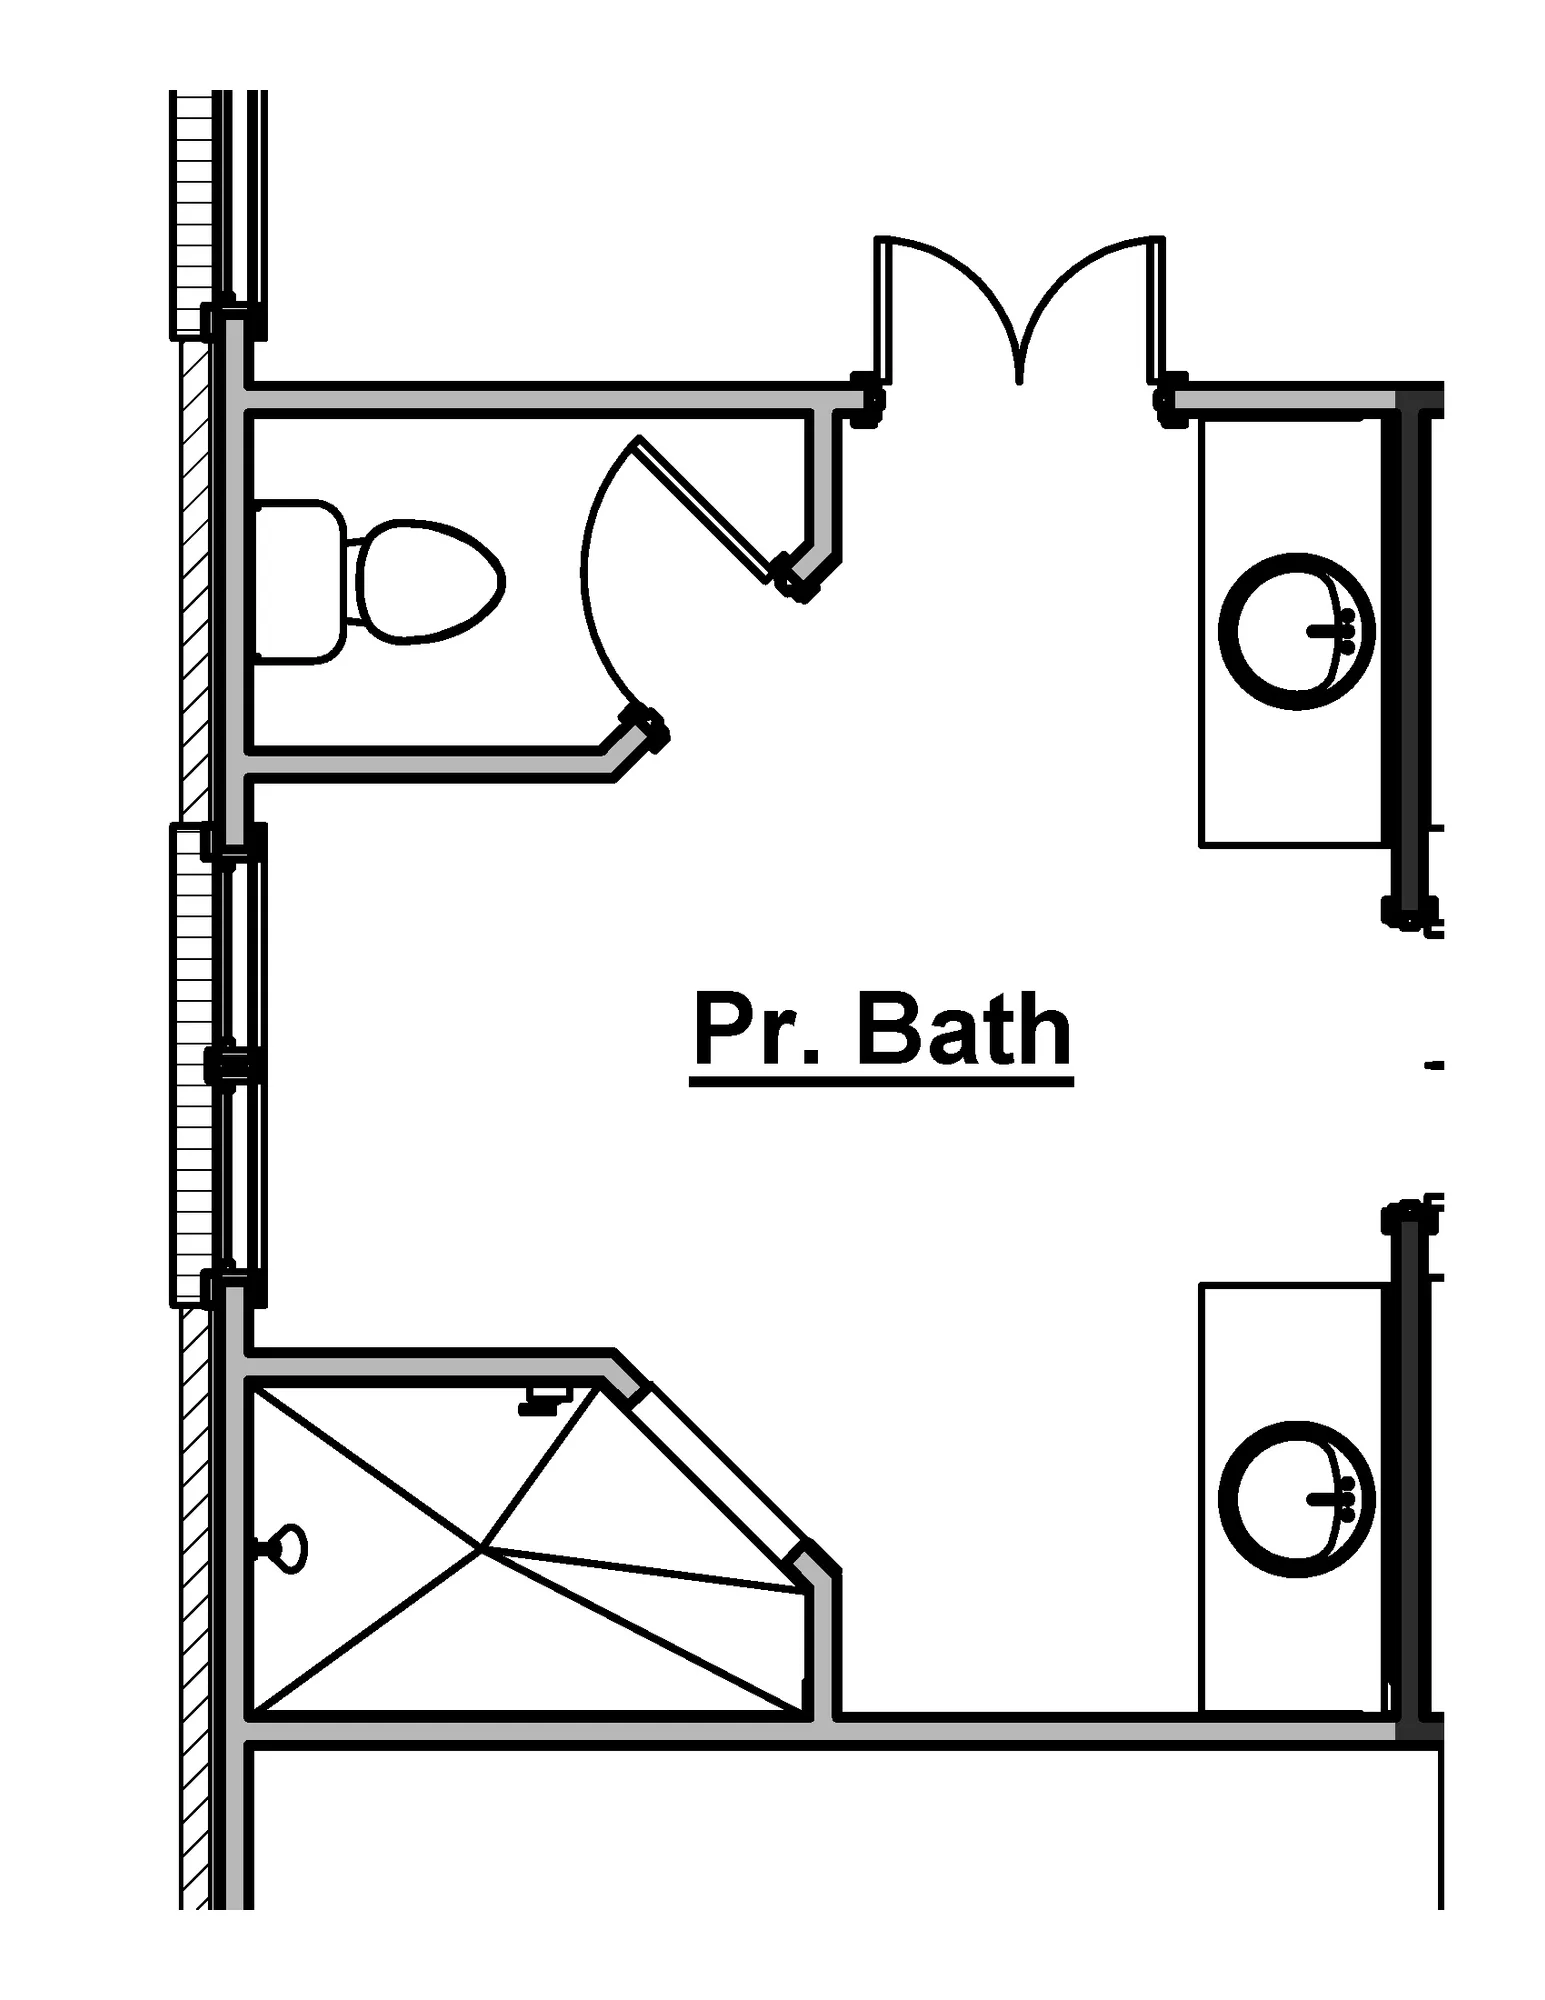 Primary Bath - Omit Tub - undefined